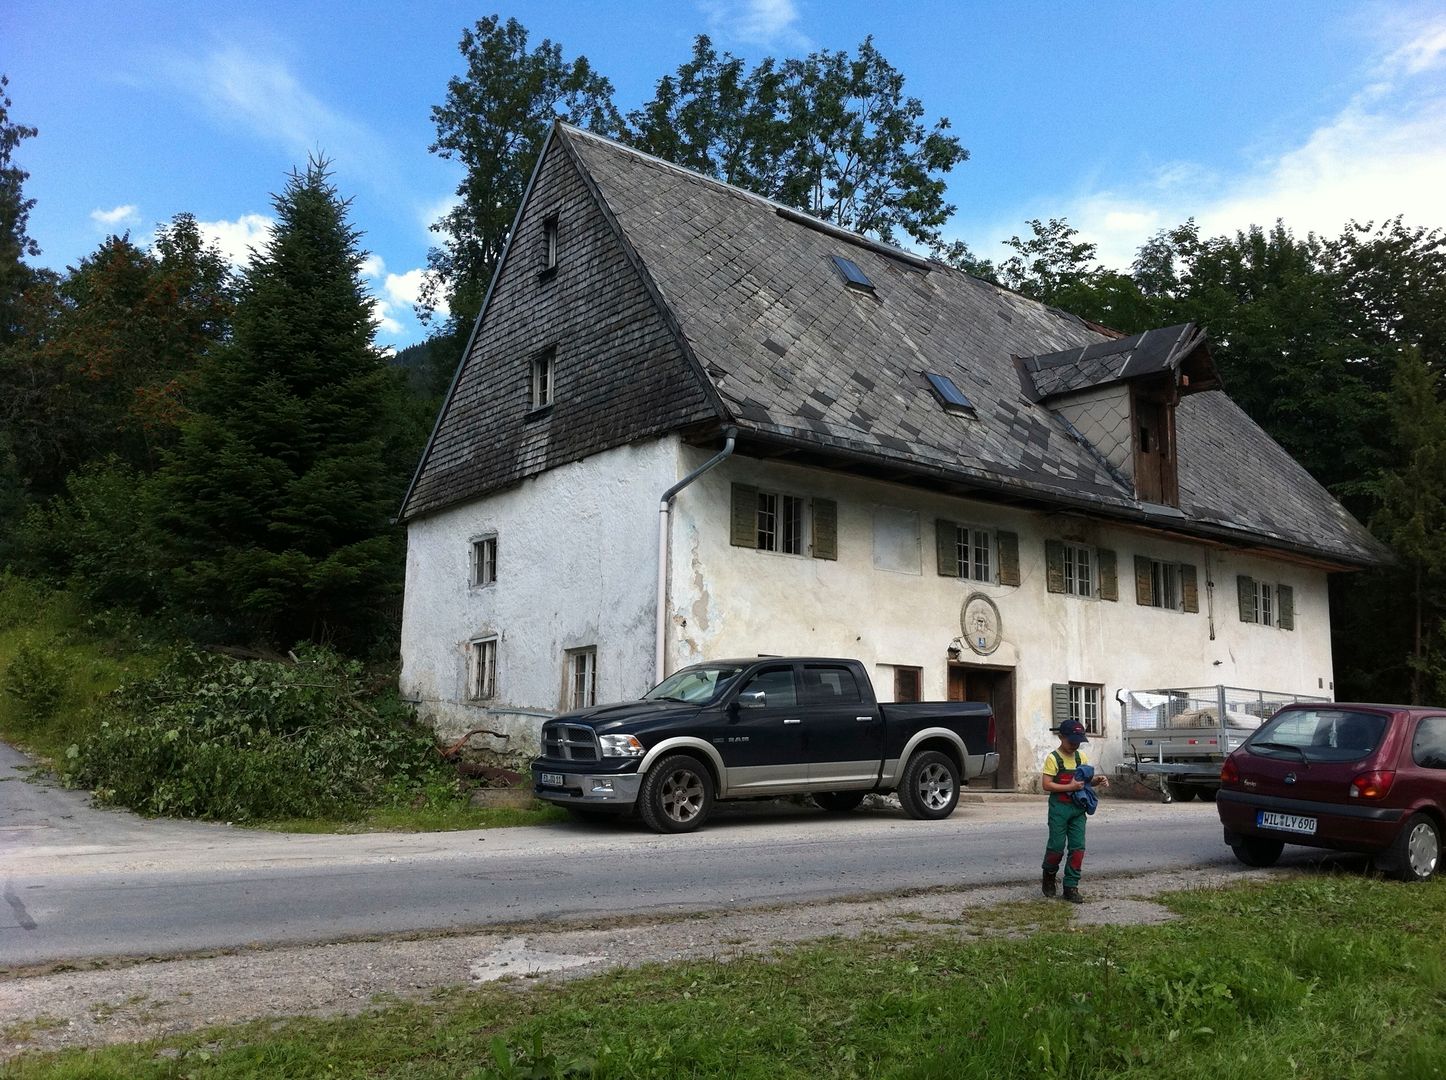 Denkmalgeschützte historische Bäckerei "altes Nigglhaus" Bj. 1564 in Fischbachau, betterhouse betterhouse